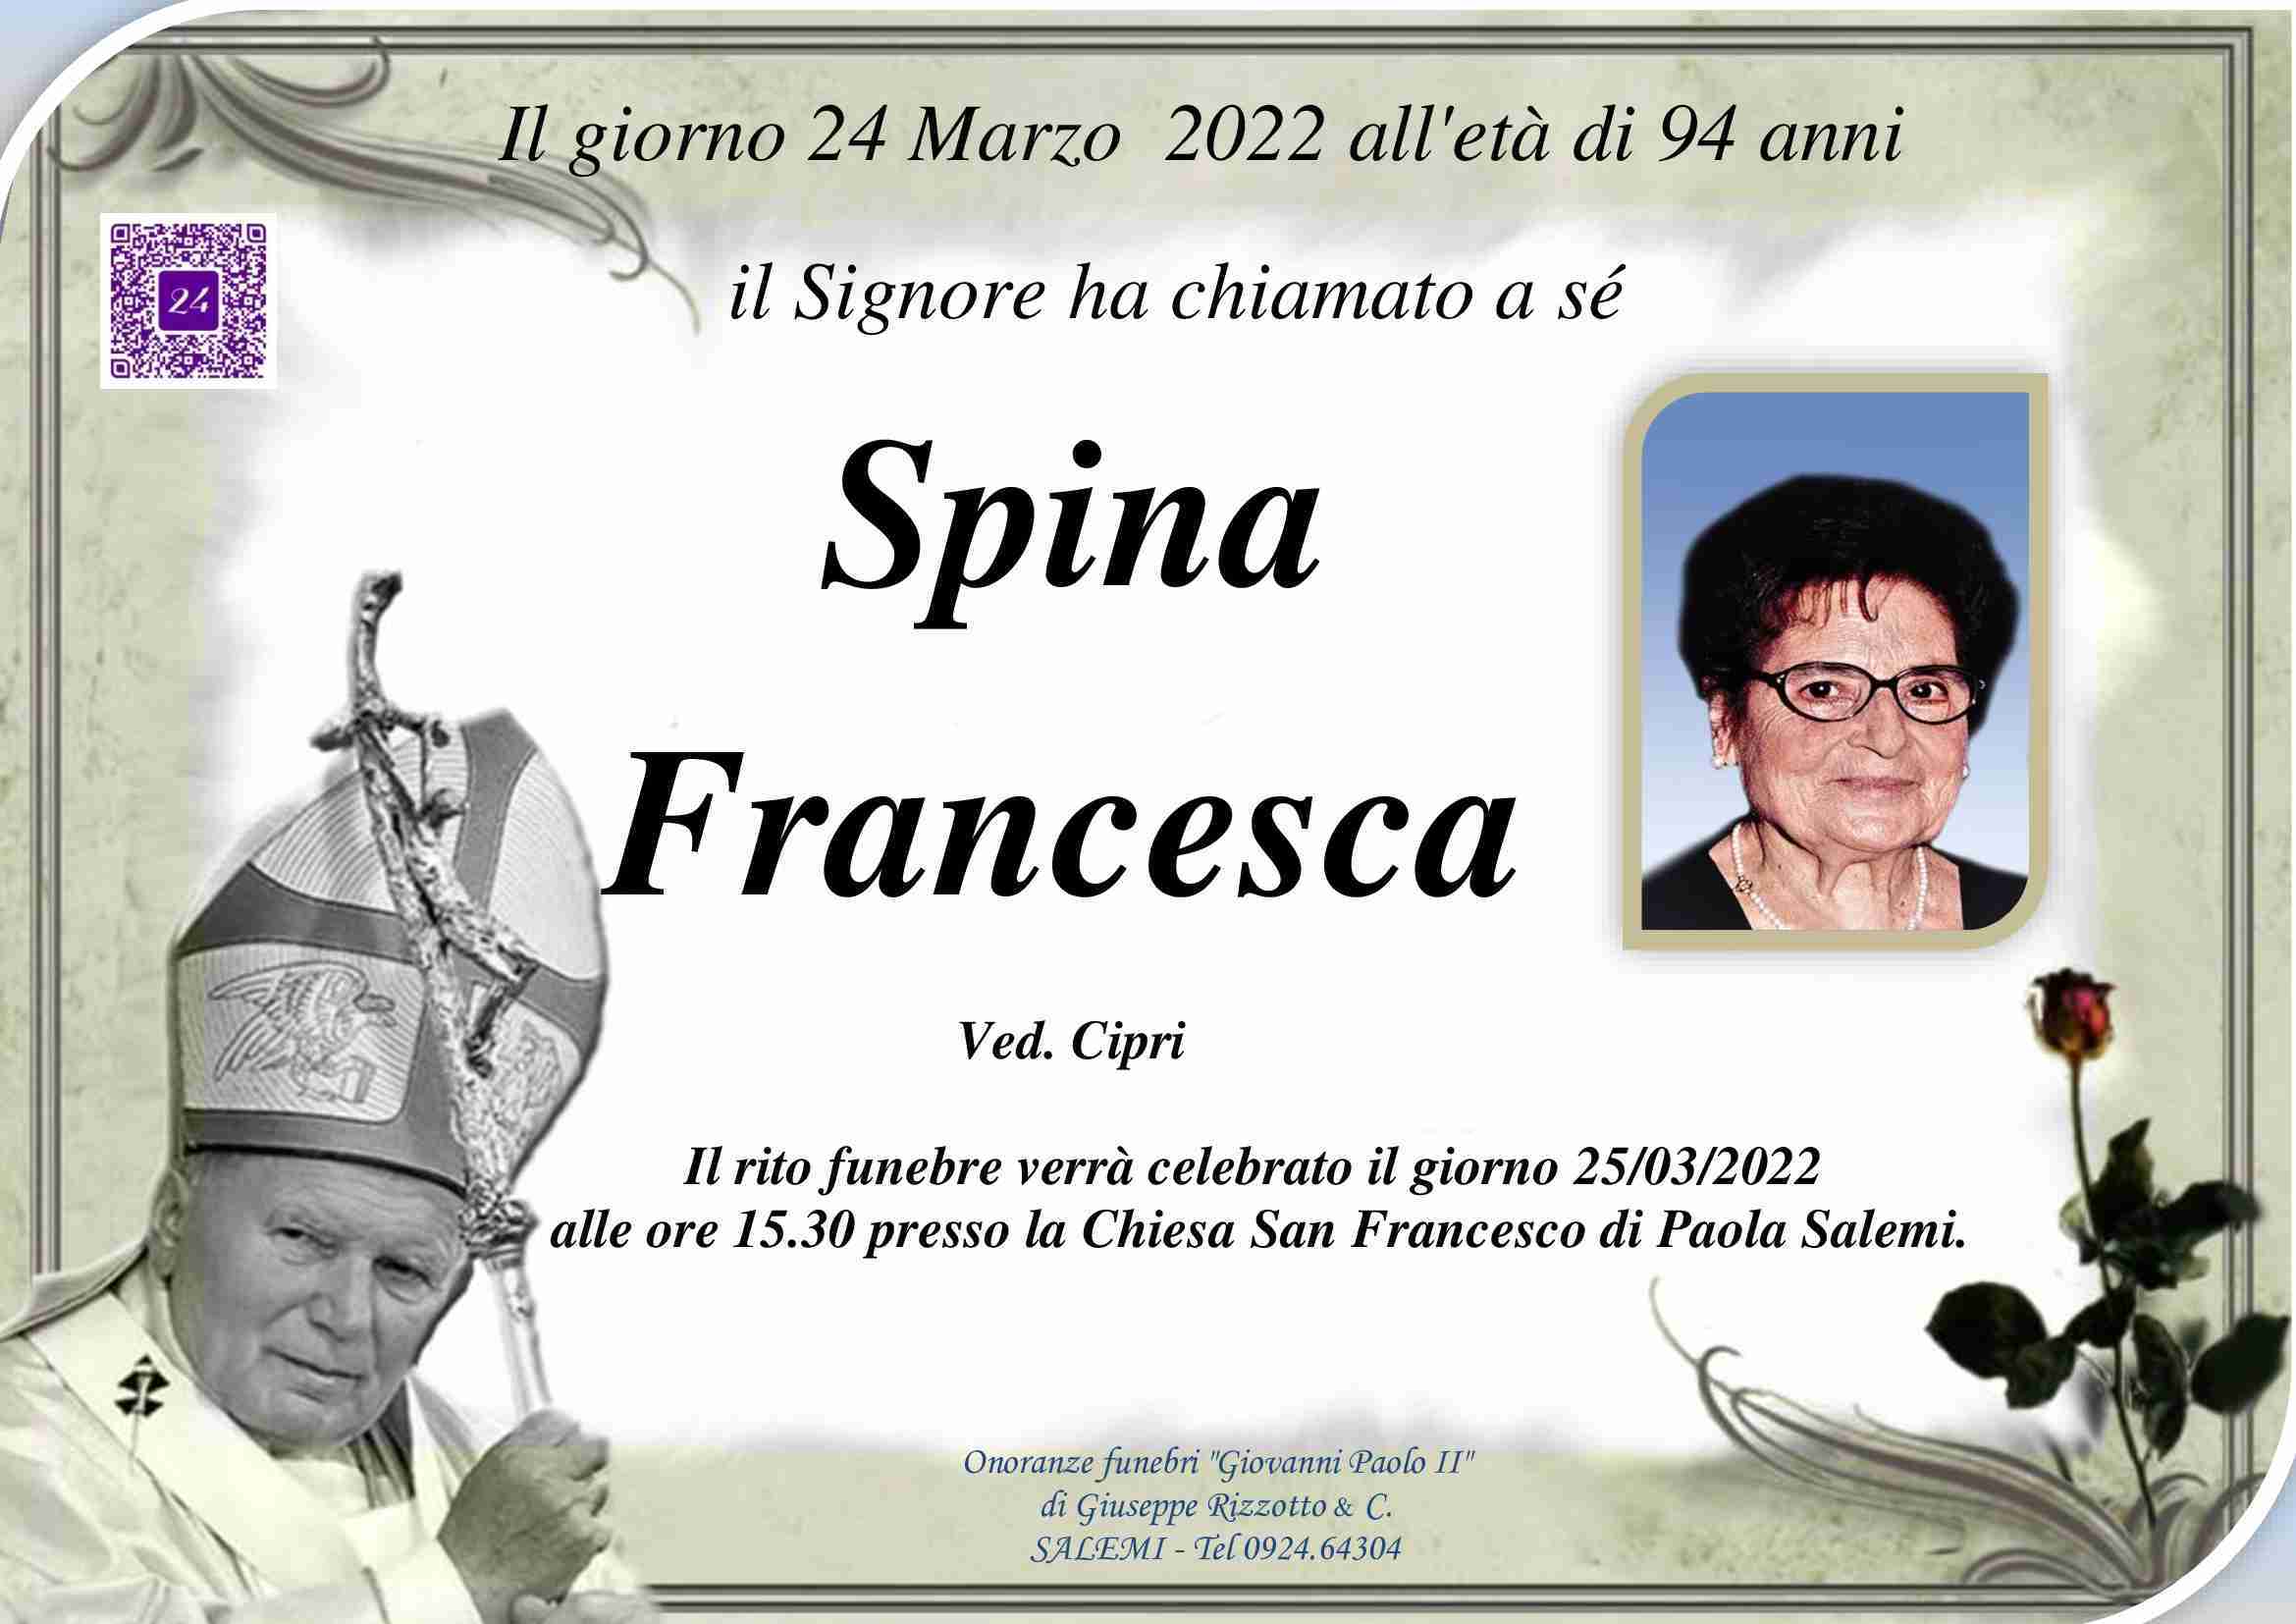 Francesca Spina